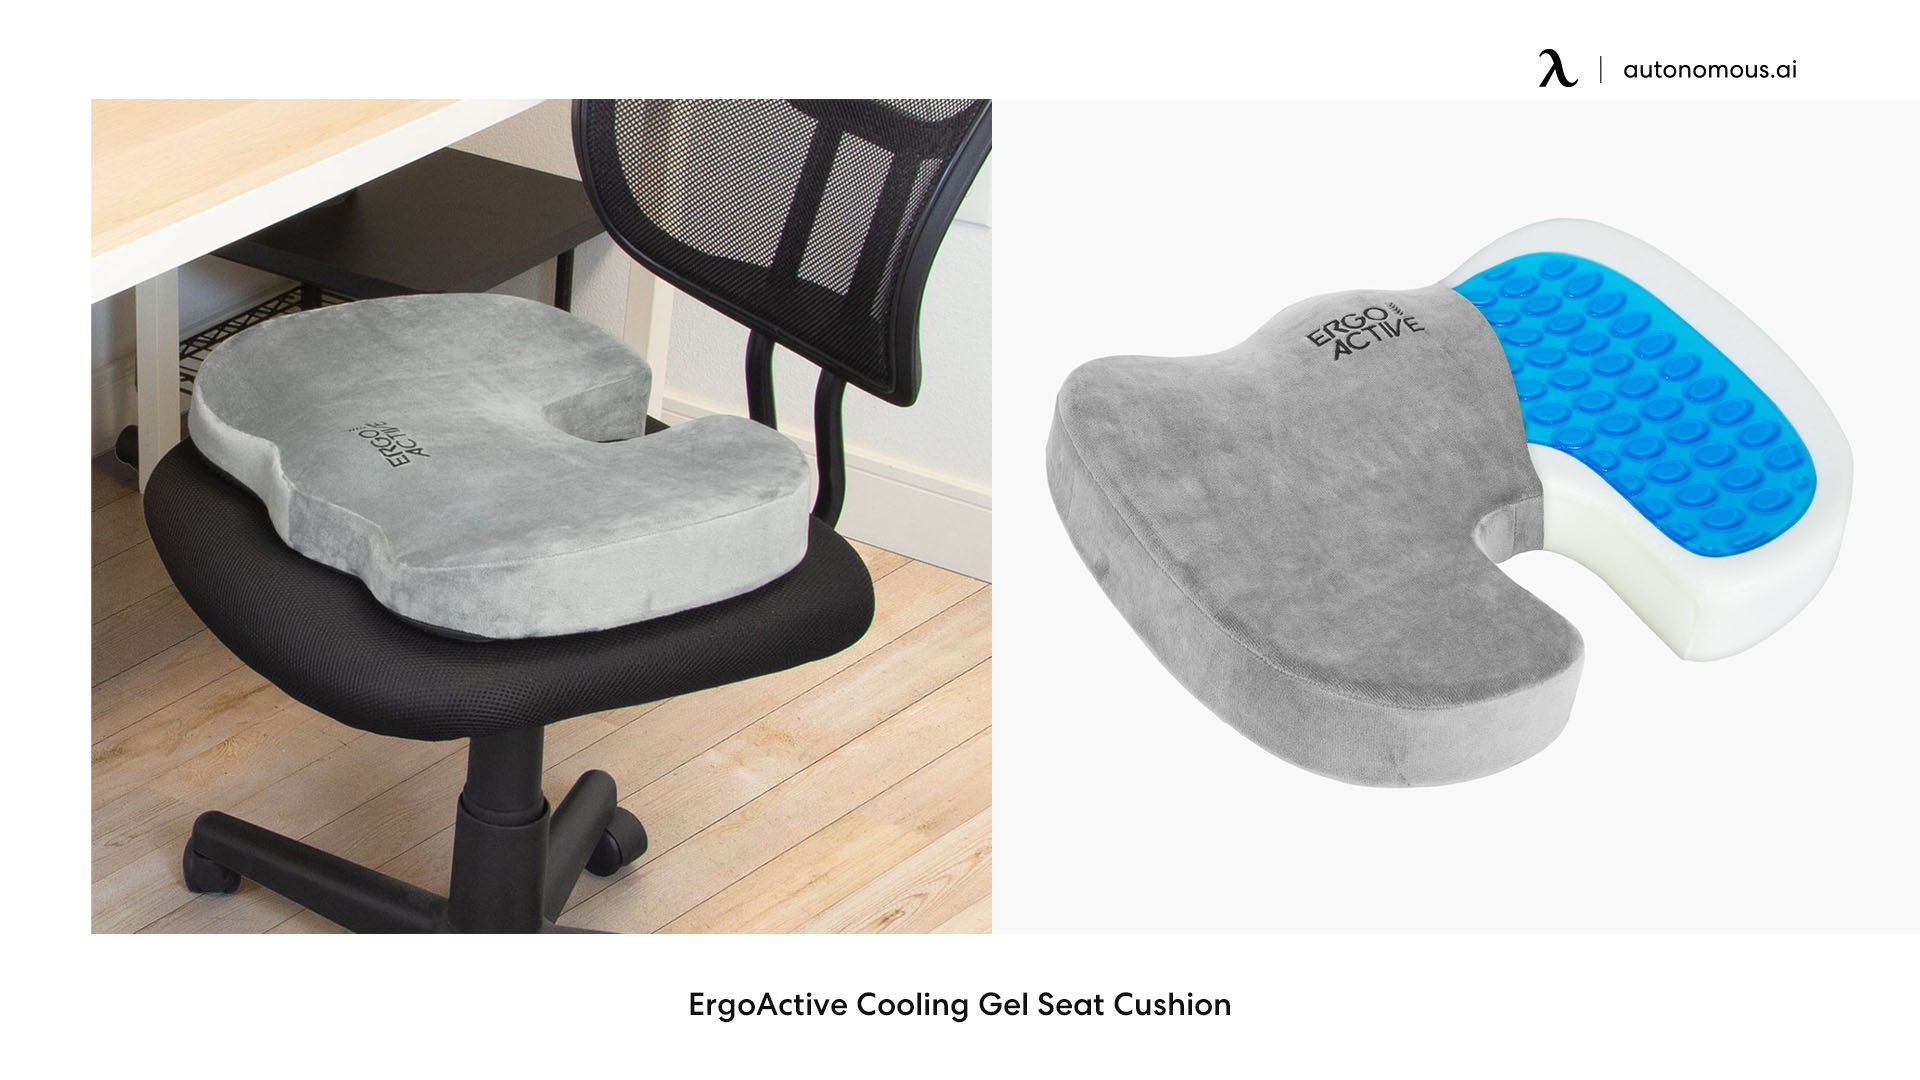 ErgoActive Cooling Gel Seat Cushion sciatica cushion